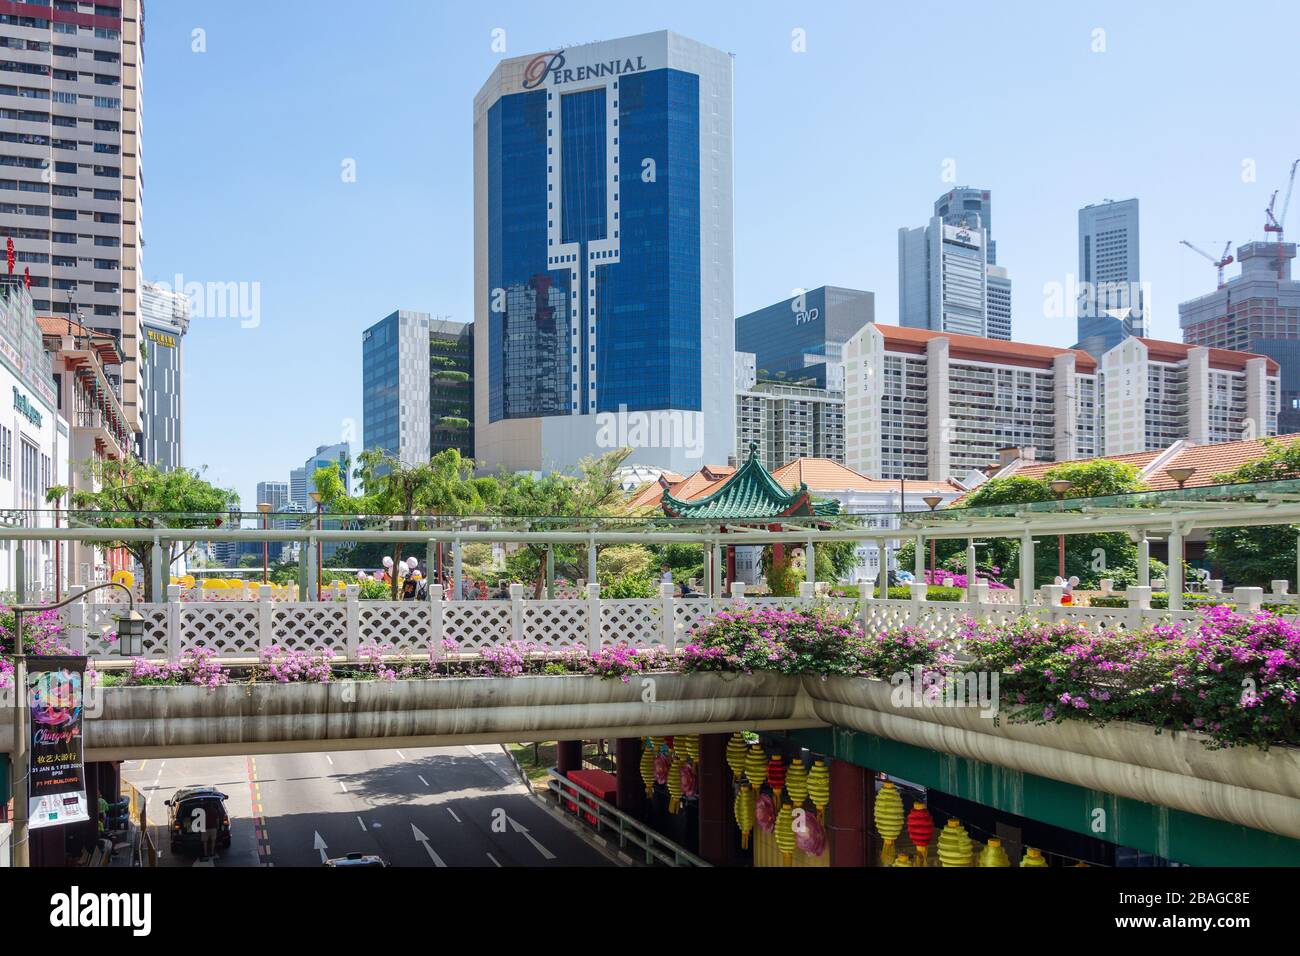 Chinese temple garden on pedestrian walkway, Eu Tong Sen Street, Chinatown, Republic of Singapore Stock Photo